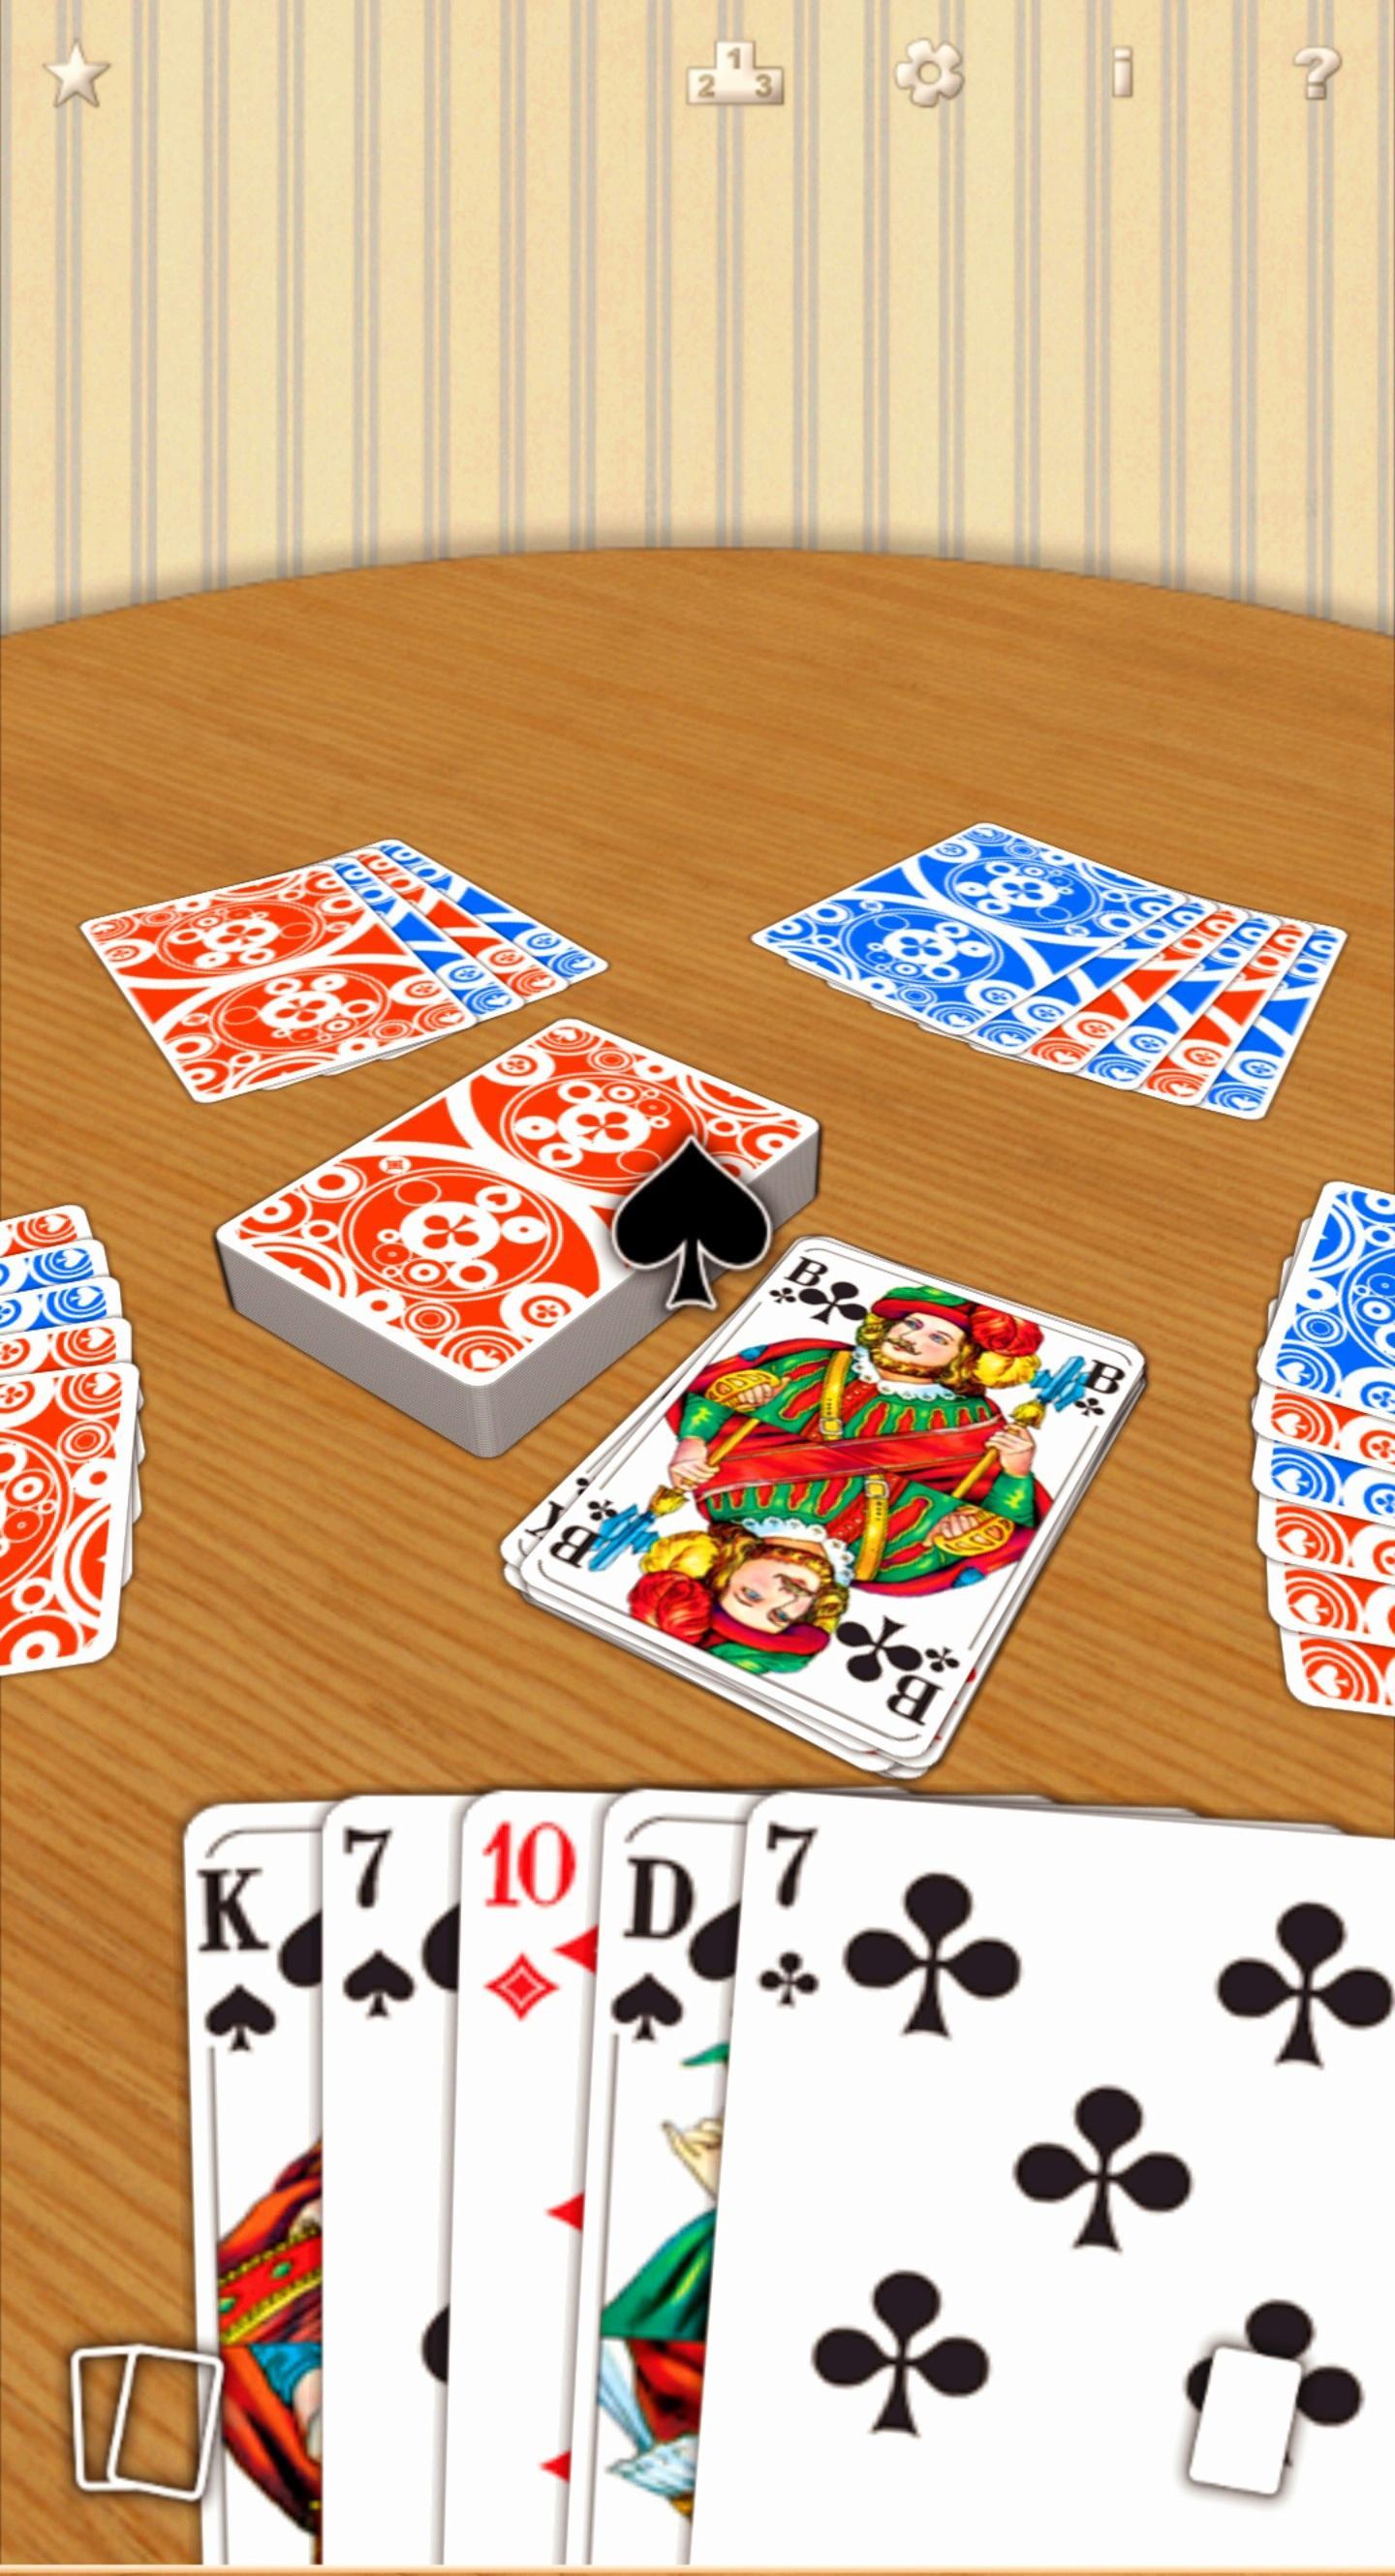 Crazy Eights free card game 1.6.96 Screenshot 19